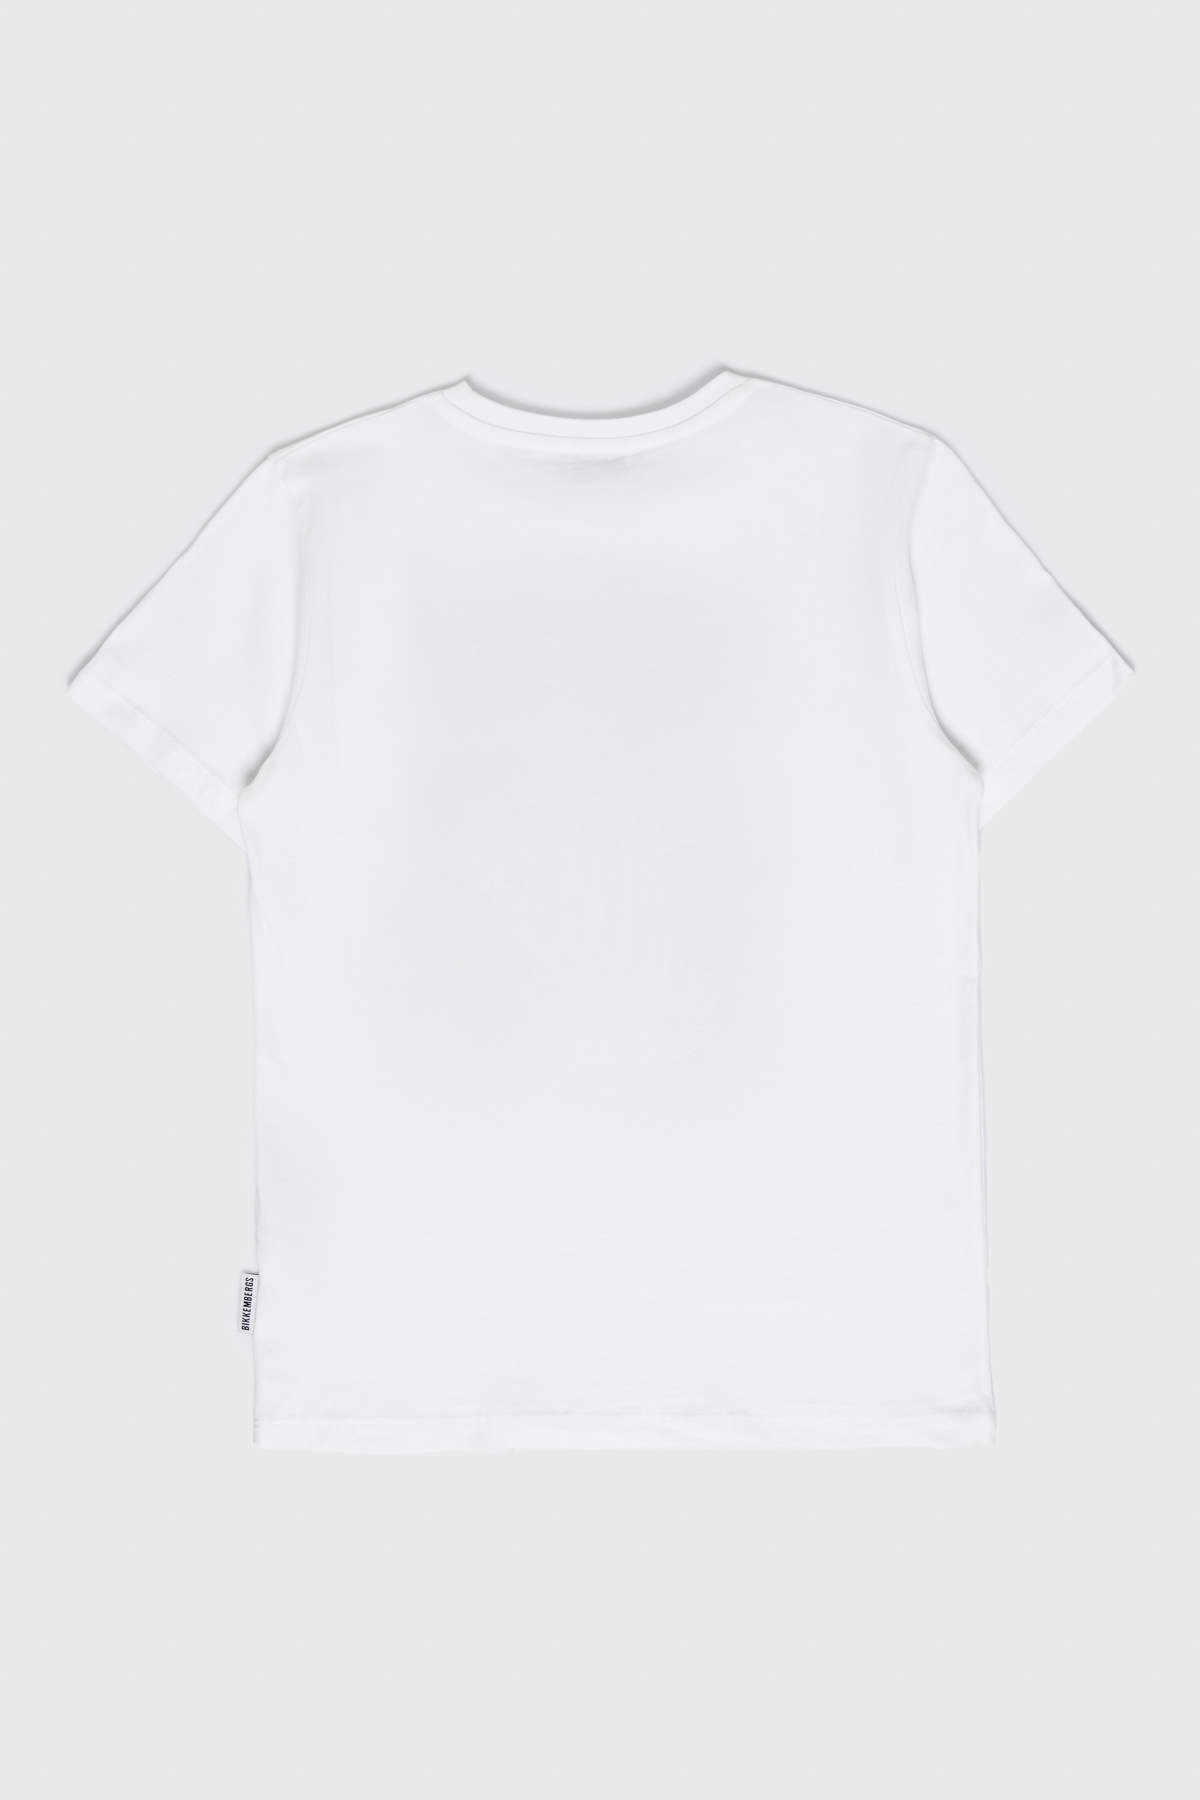 Erkek Çocuk Beyaz T-Shirt 